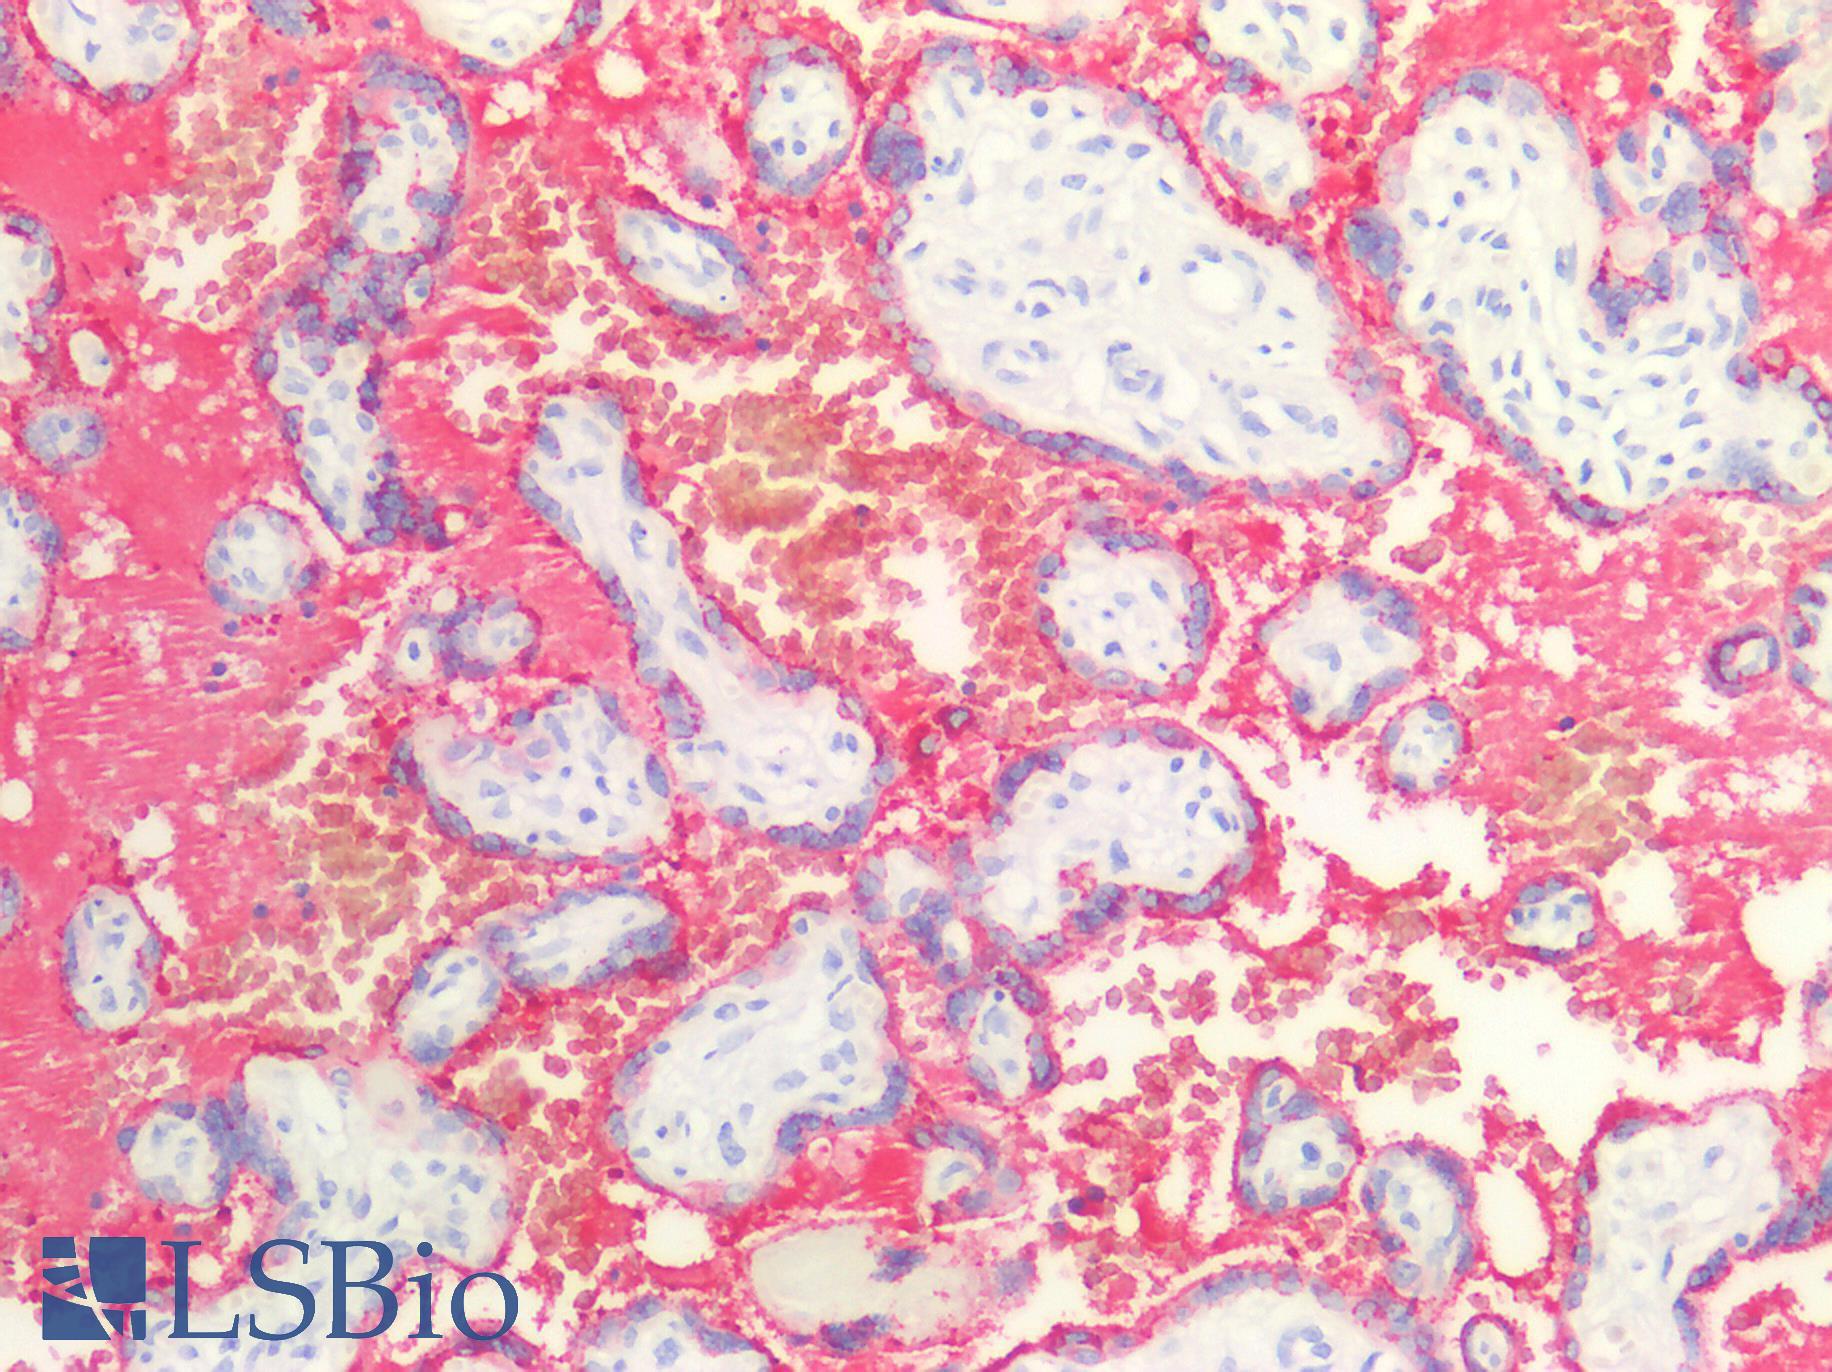 GH / Growth Hormone Antibody - Human Placenta: Formalin-Fixed, Paraffin-Embedded (FFPE)